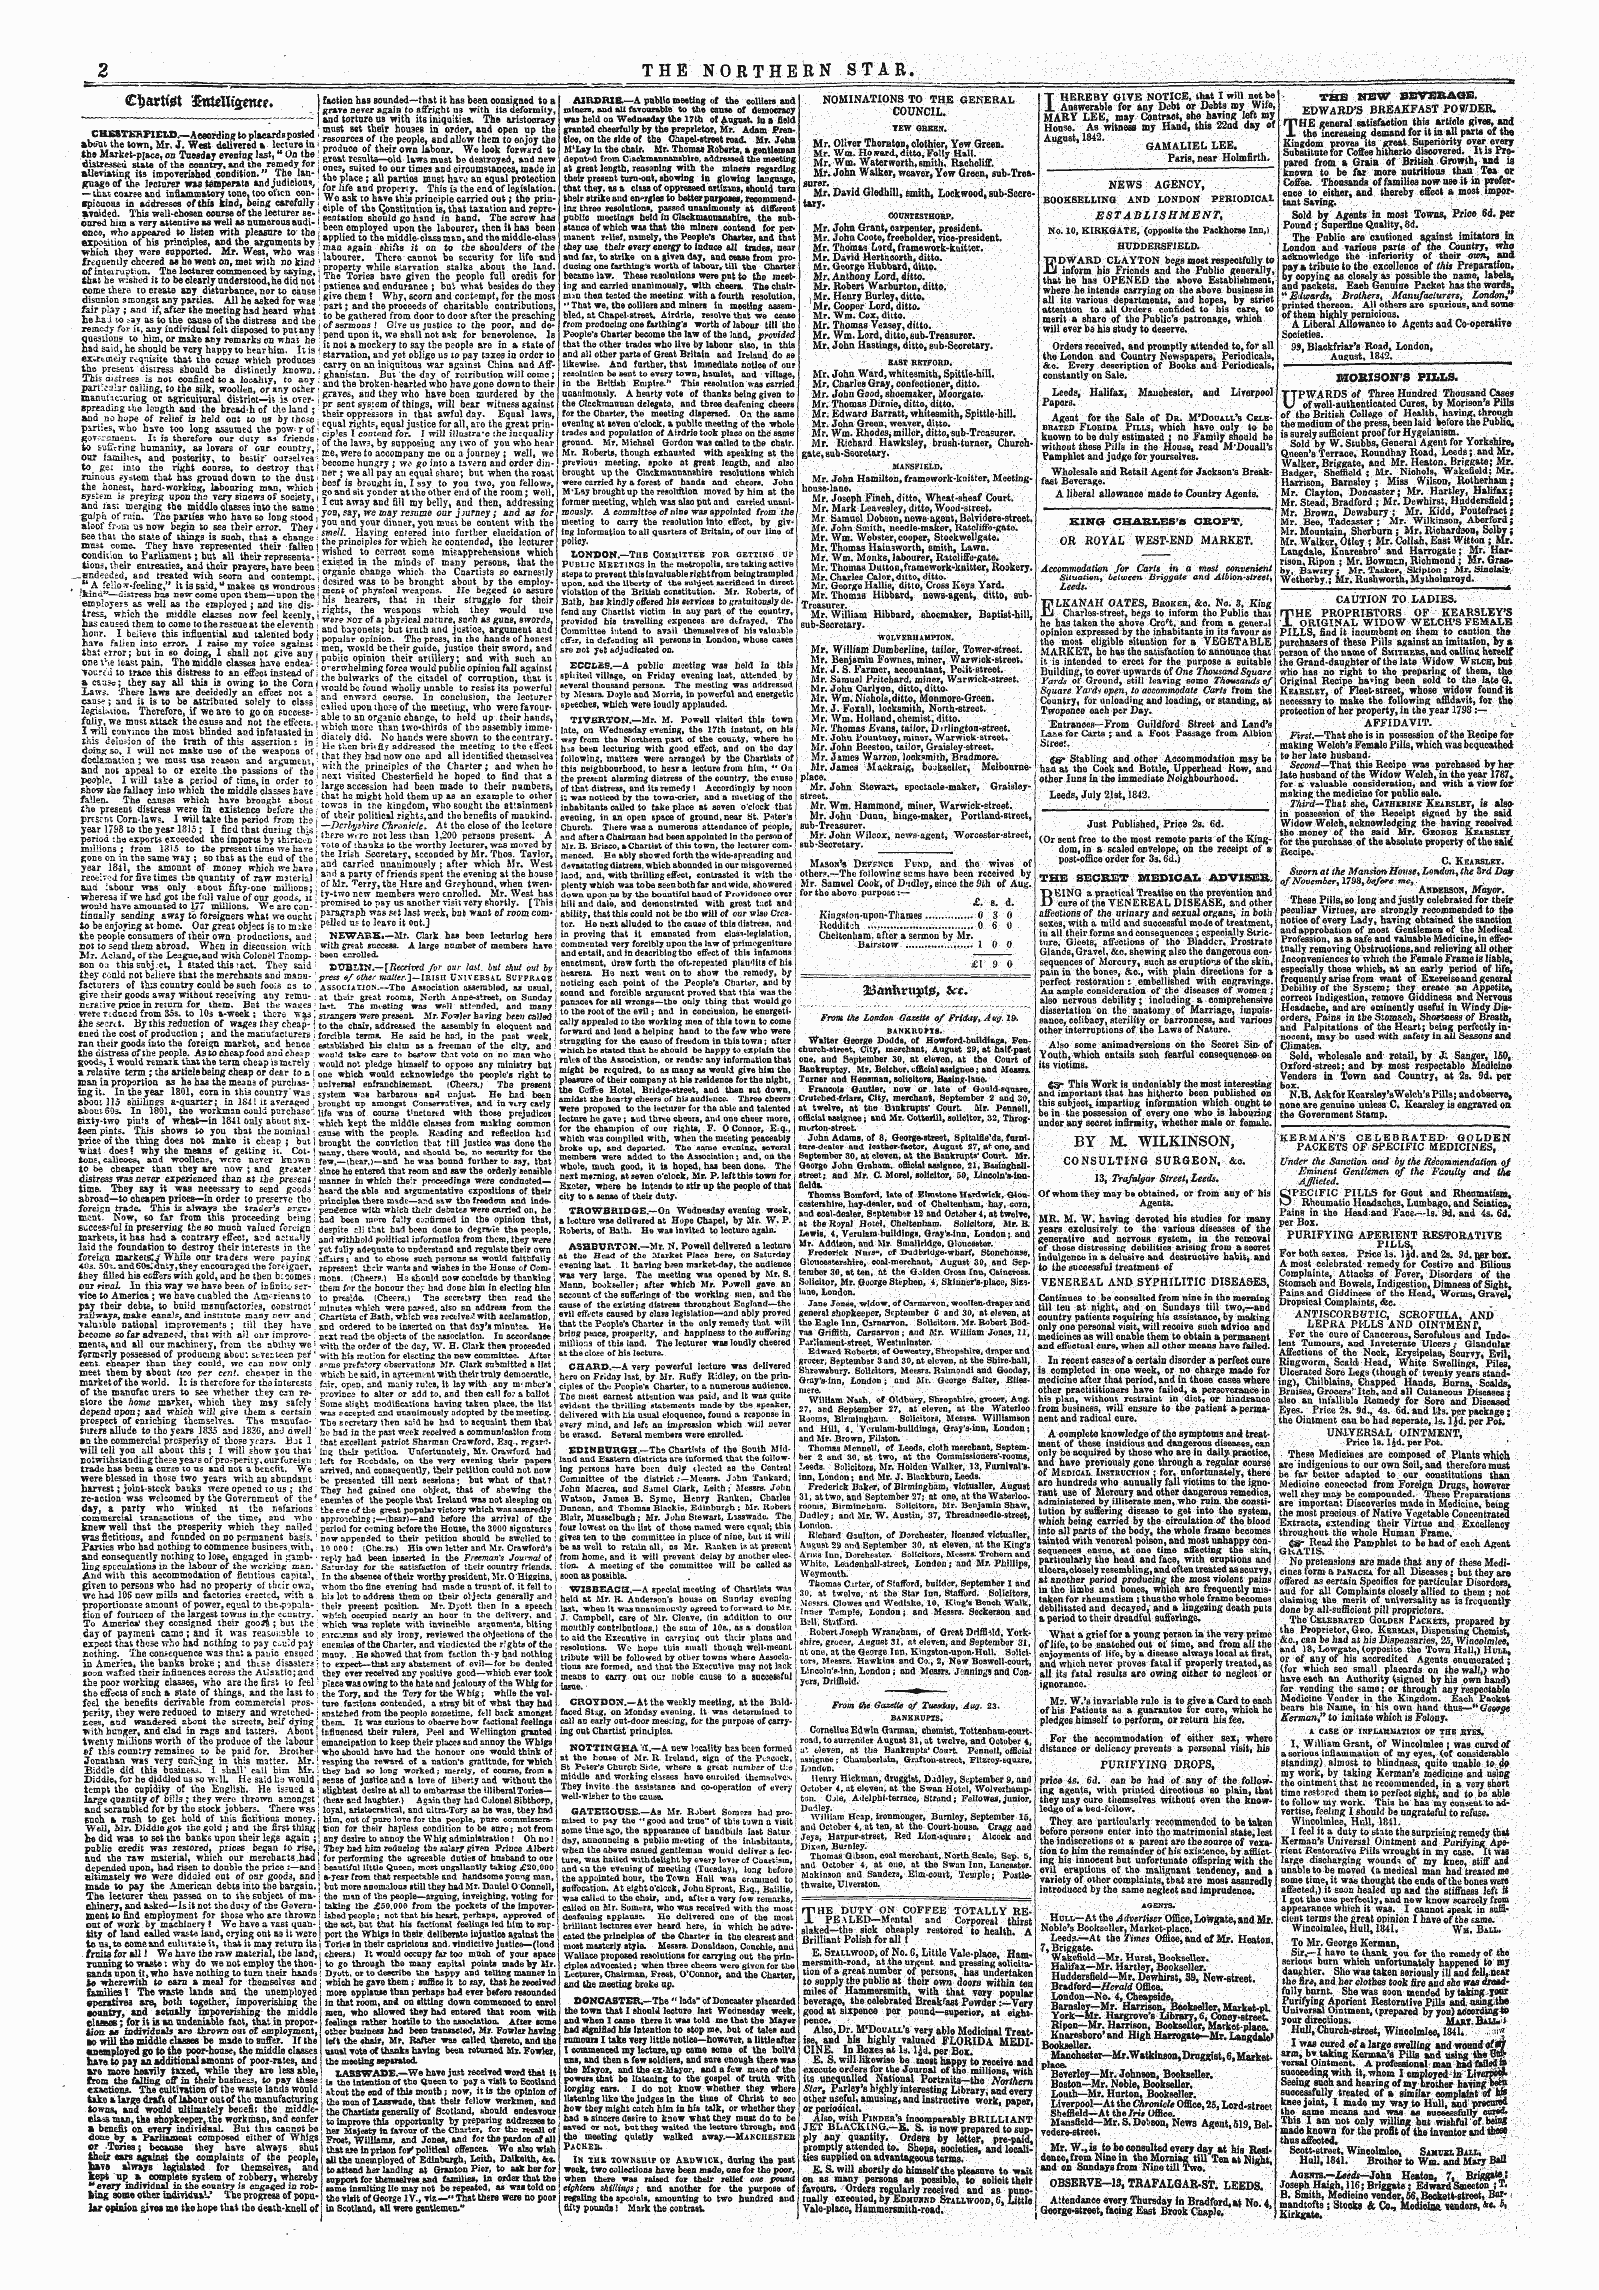 Northern Star (1837-1852): jS F Y, 5th edition: 2